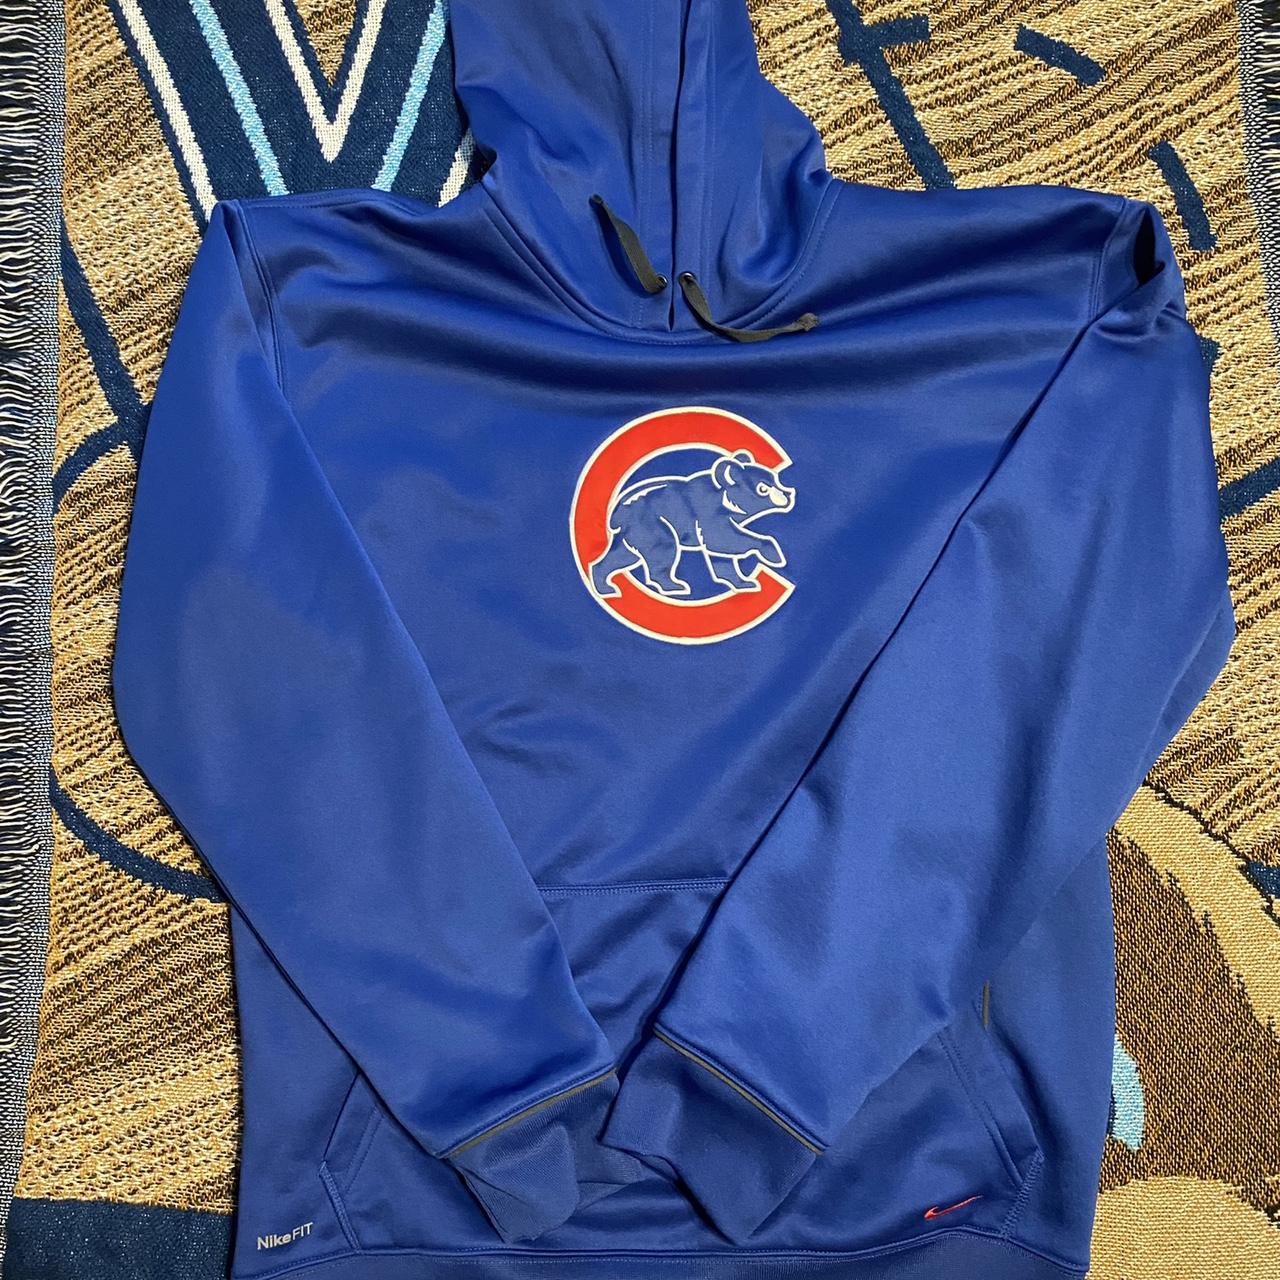 Chicago Cubs x Nike hoodie sz L/M looks a little - Depop